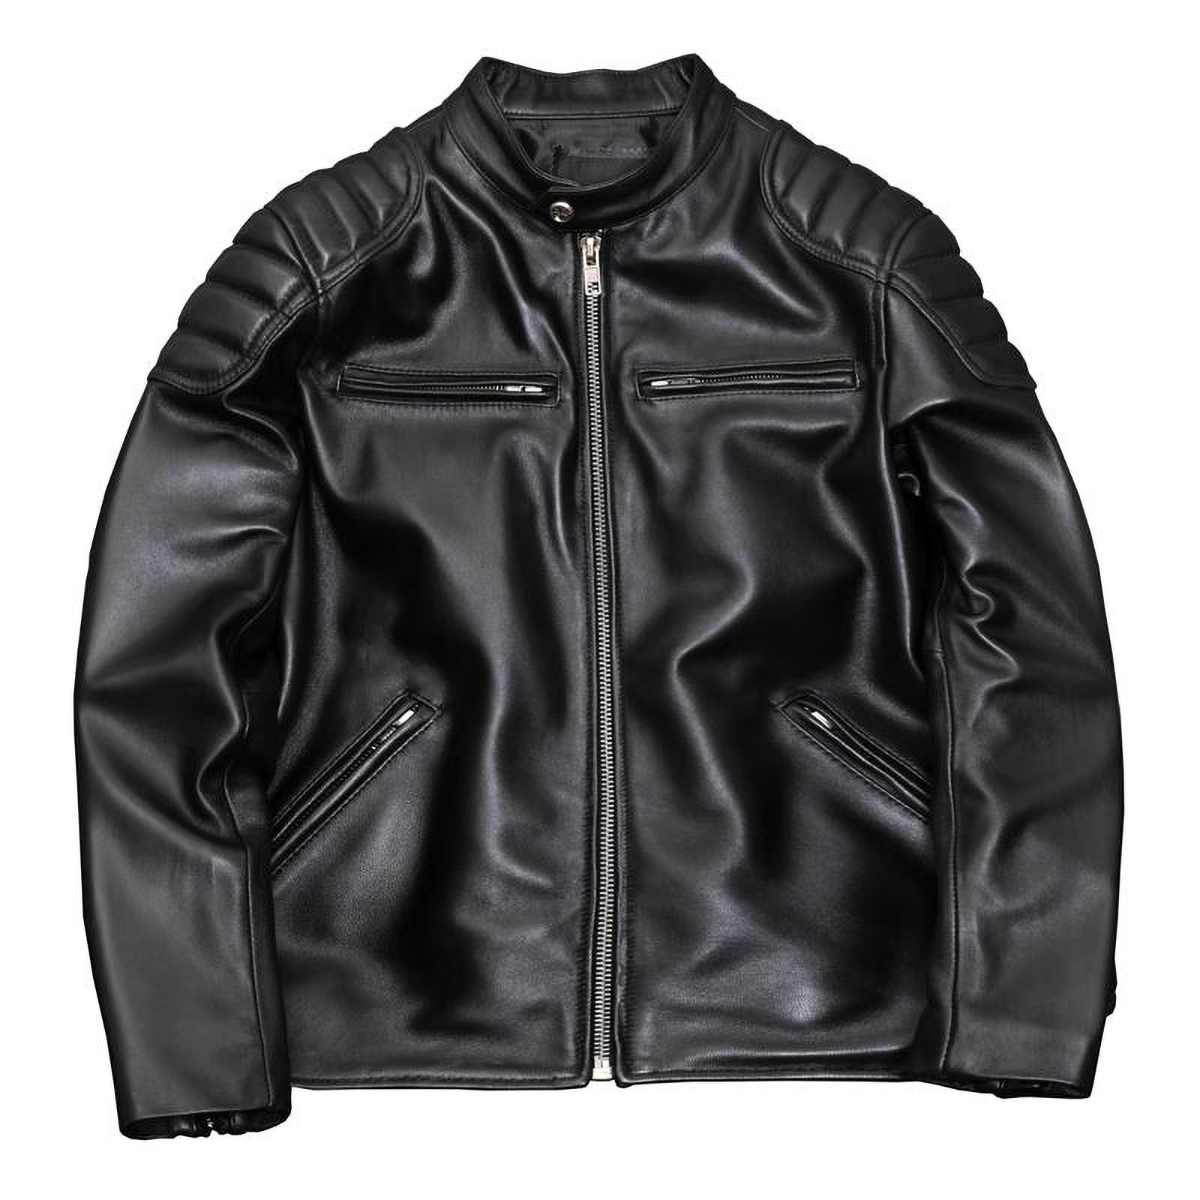 Men's Heavy Black Leather Motorcycle Biker Jacket